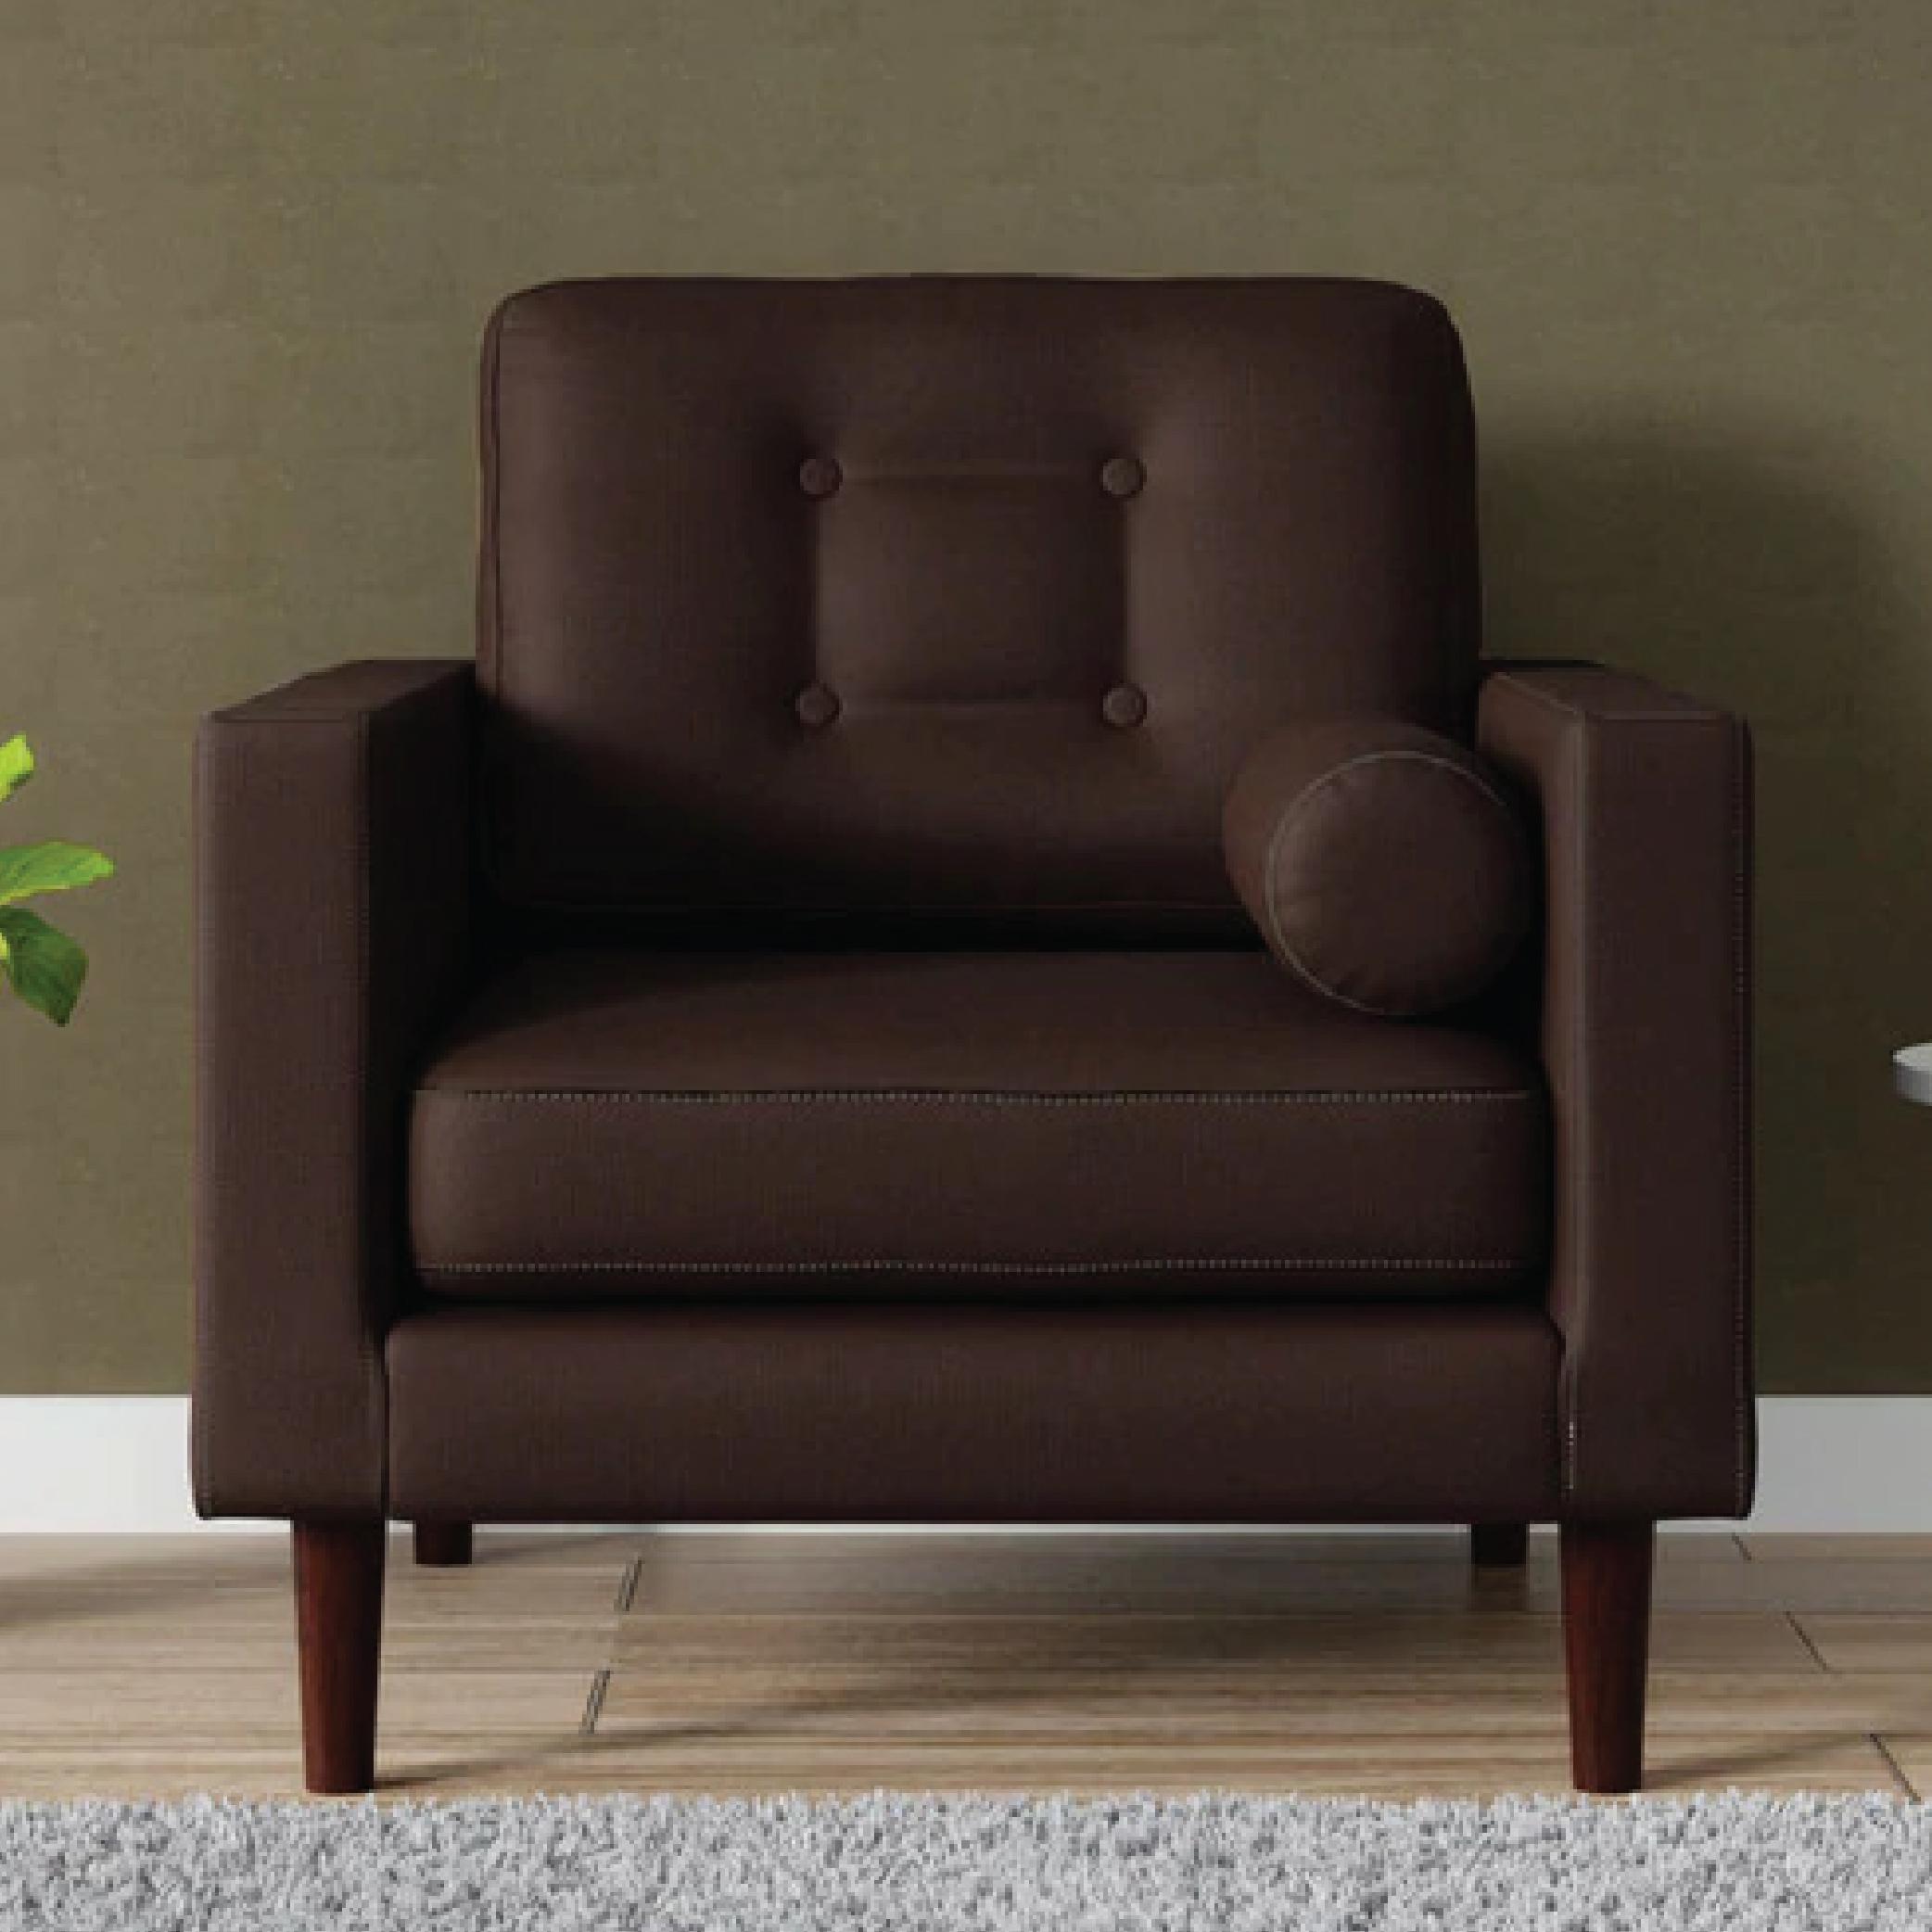 Forli One Seater Sofa in Chestnut Brown Colour